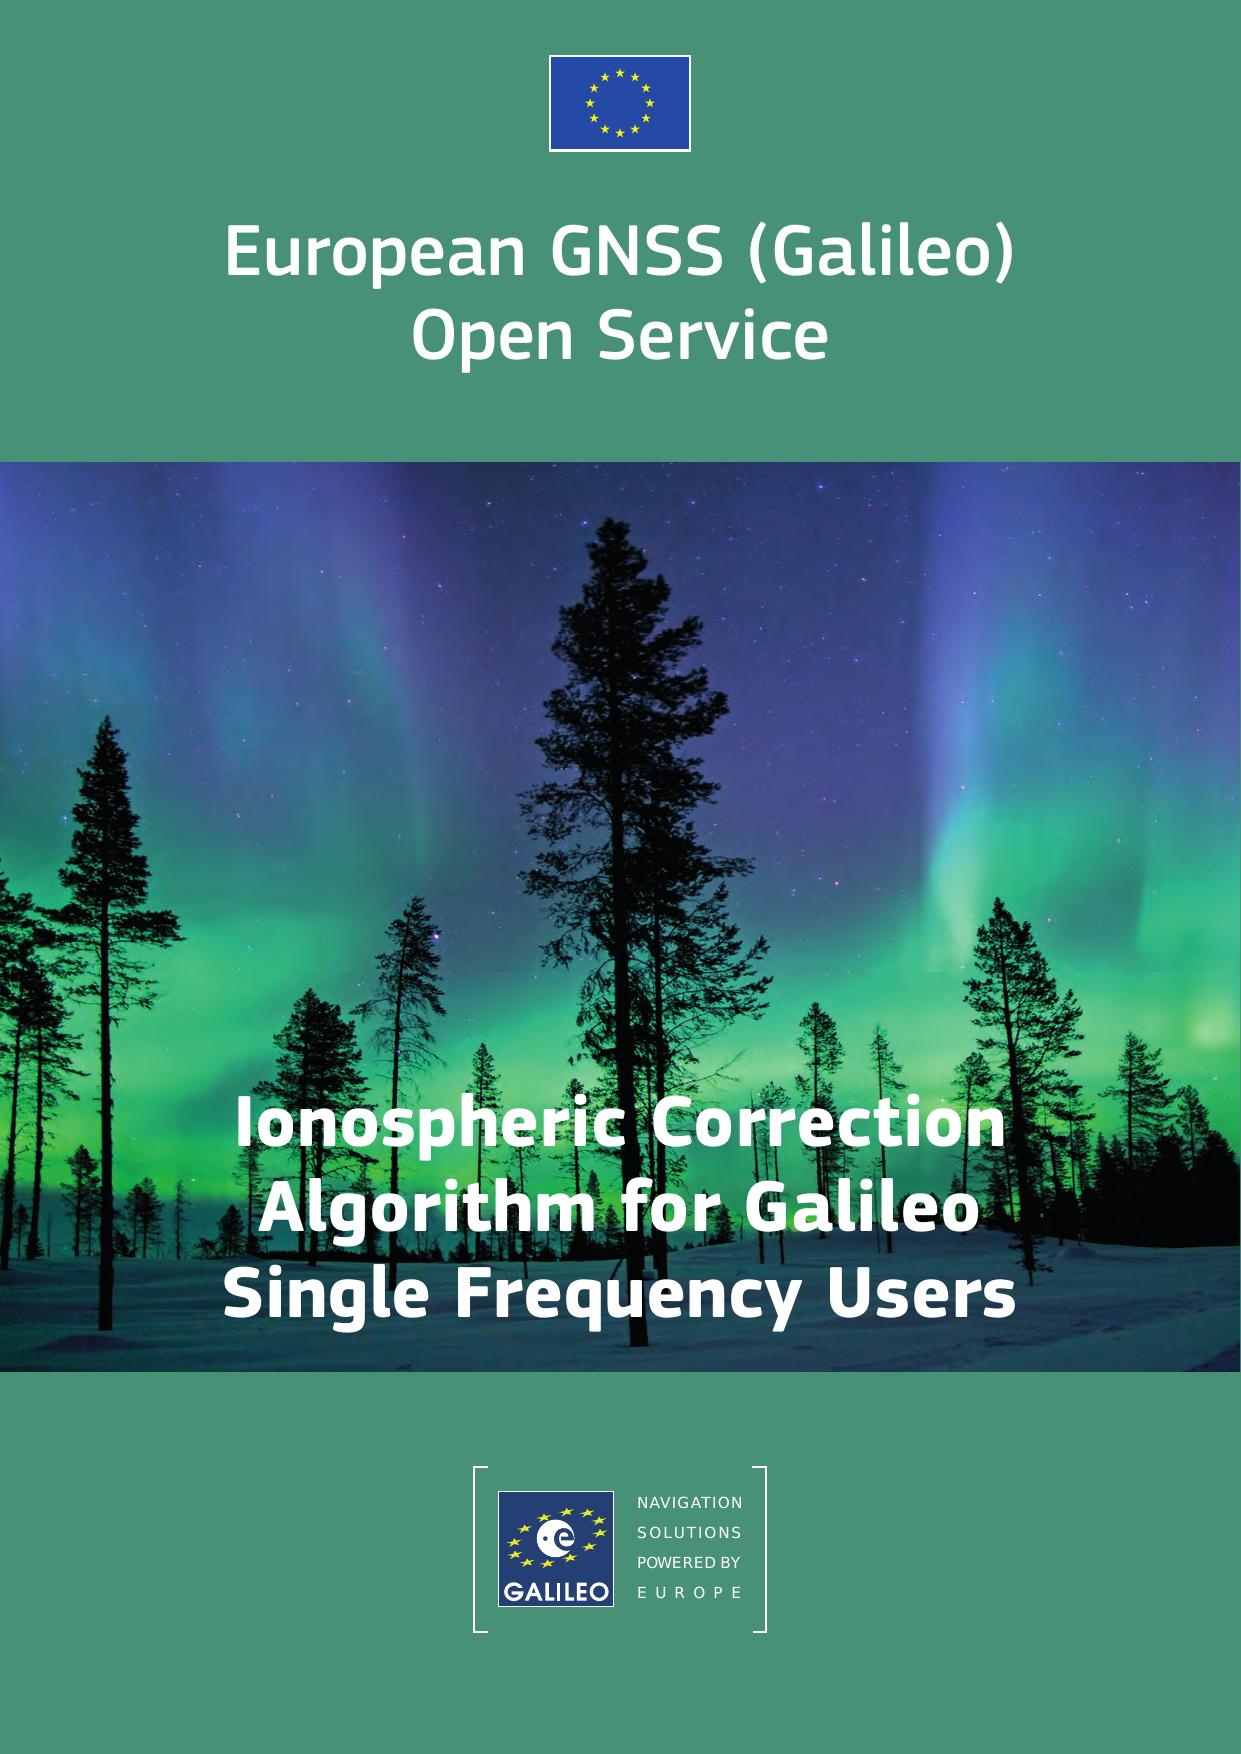 Ionospheric-Correction-Algorithm-for-Galileo-Single-Frequency-Users 2015